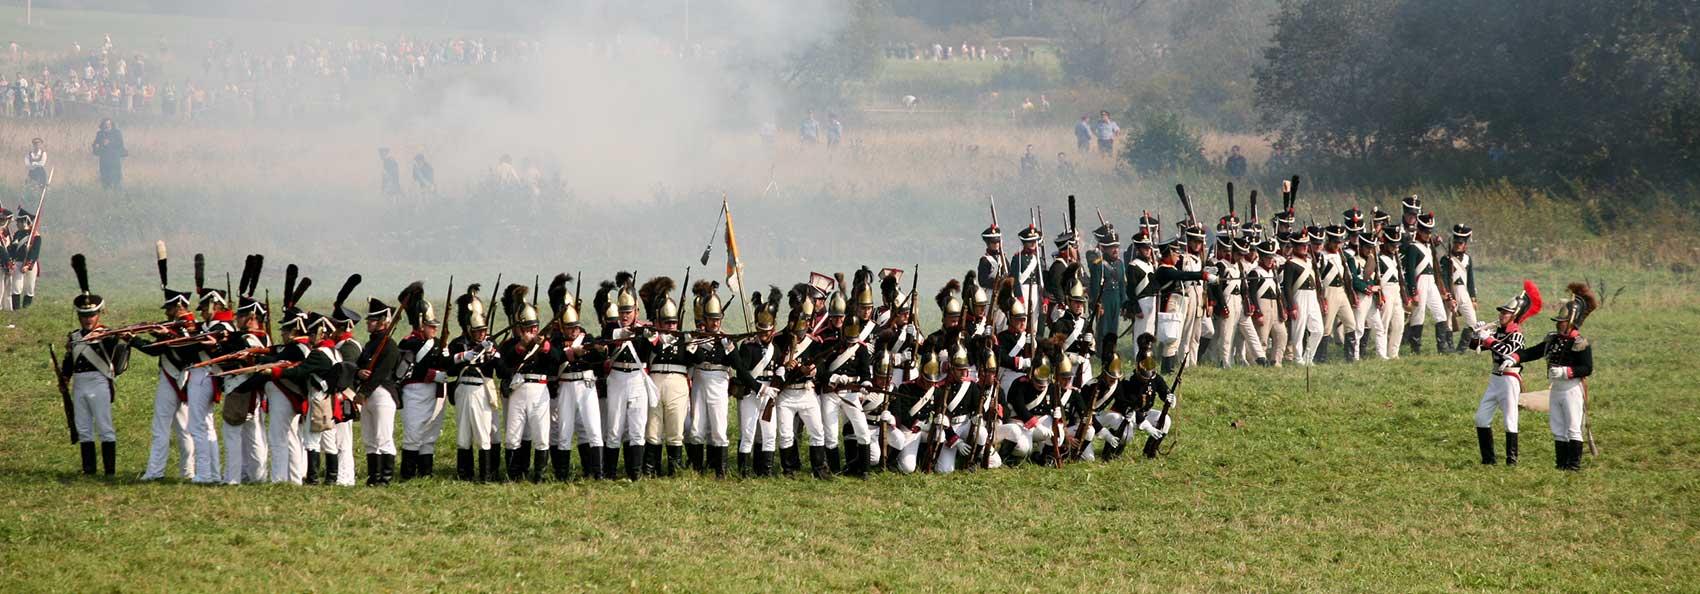 Historical reenactment of Battle of Borodino 